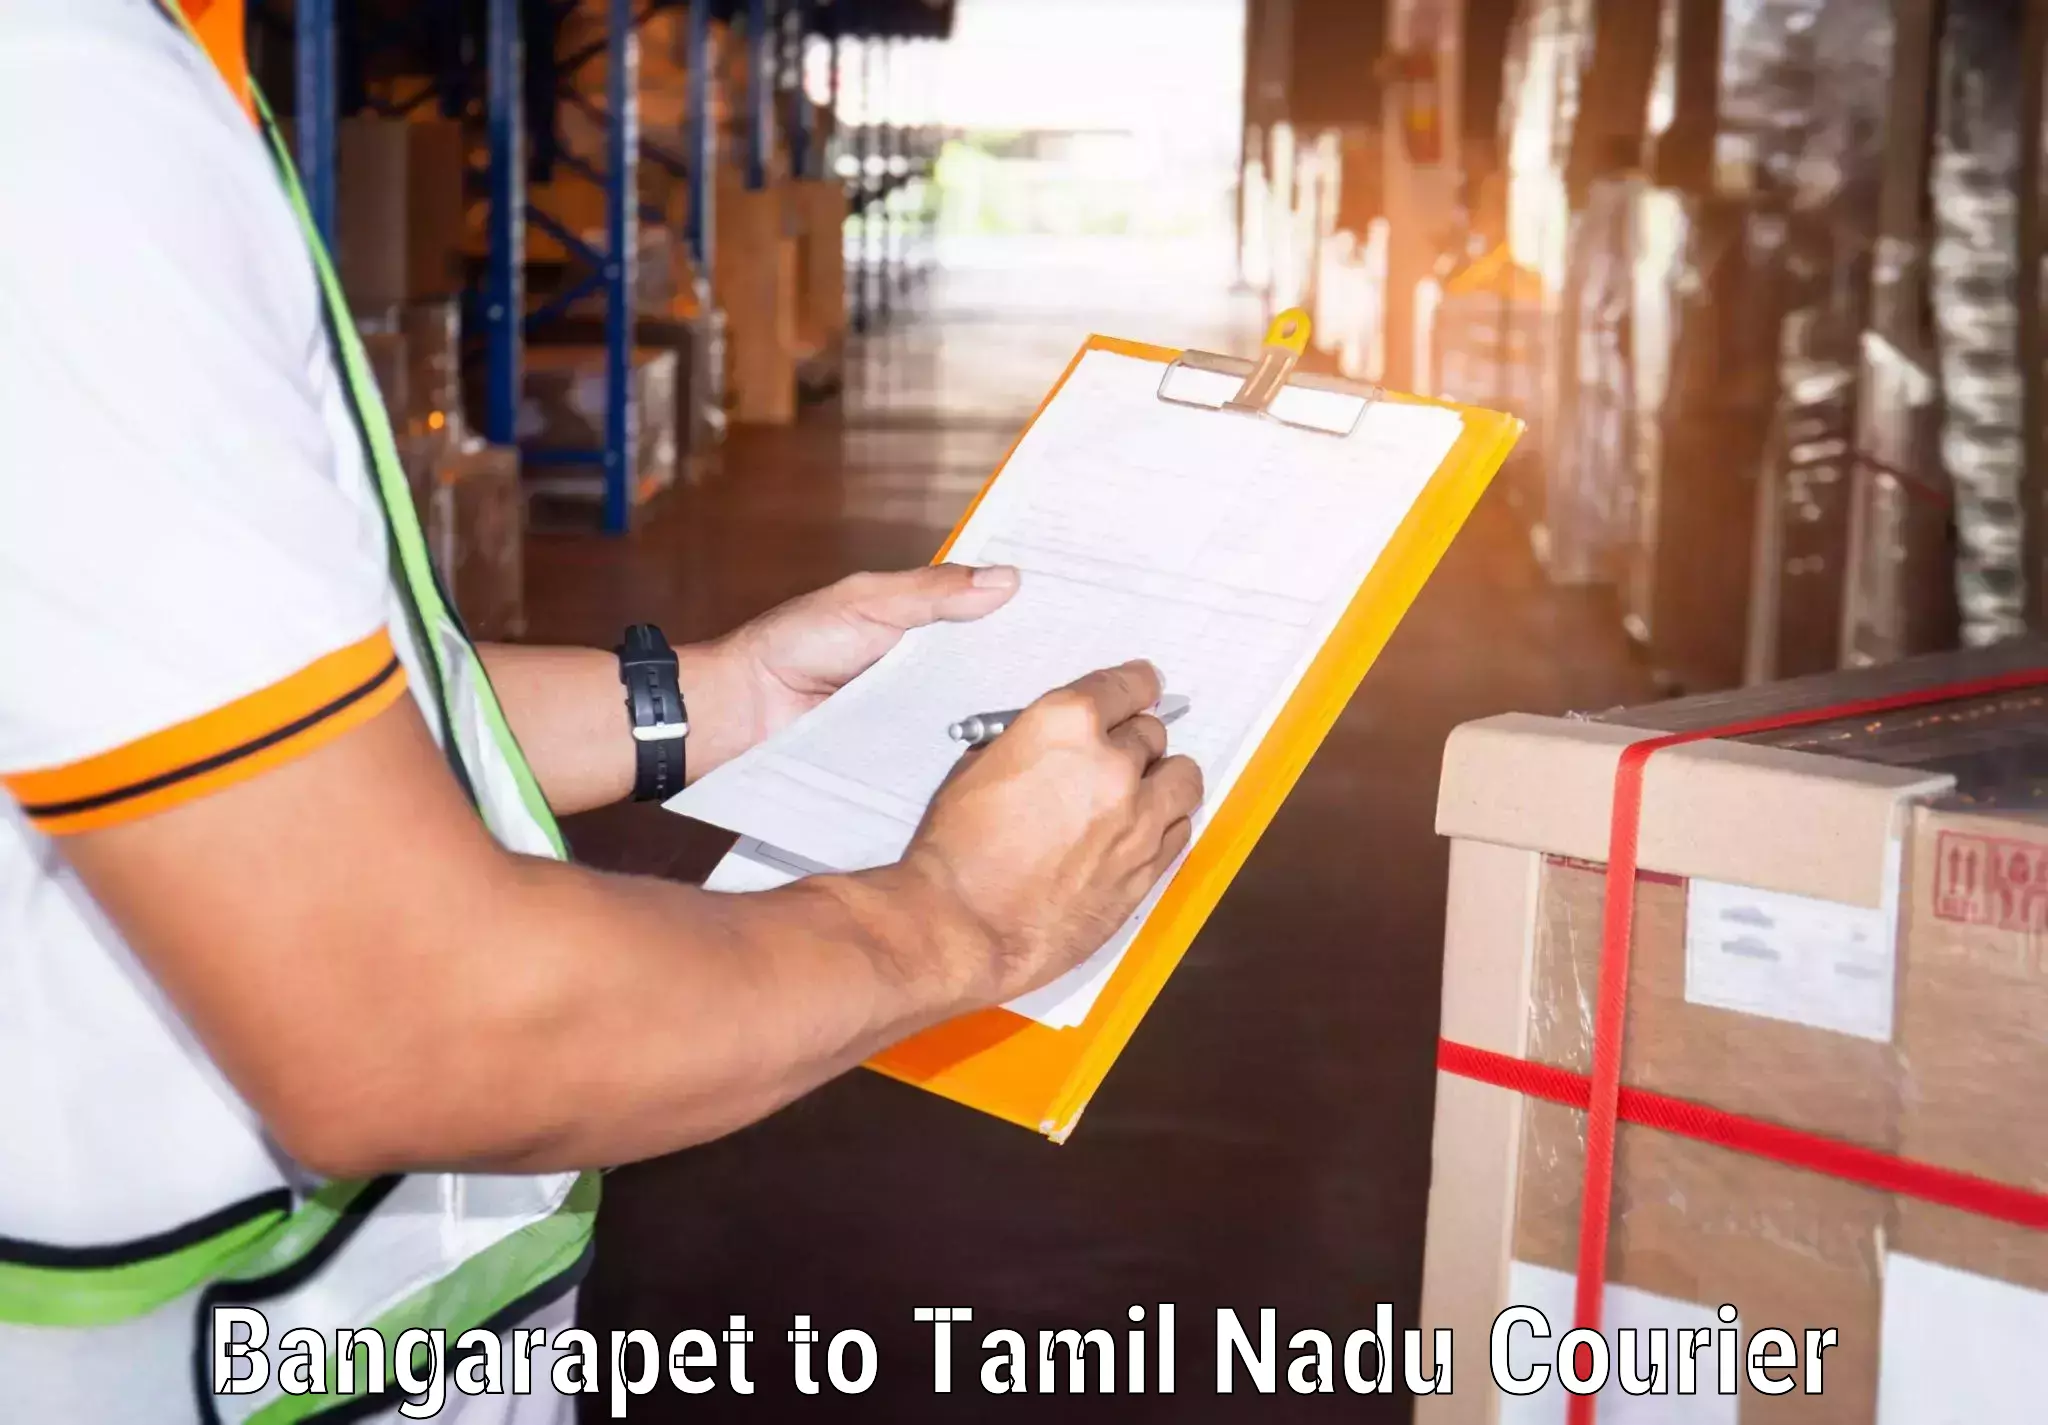 Express logistics providers Bangarapet to Chennai Port